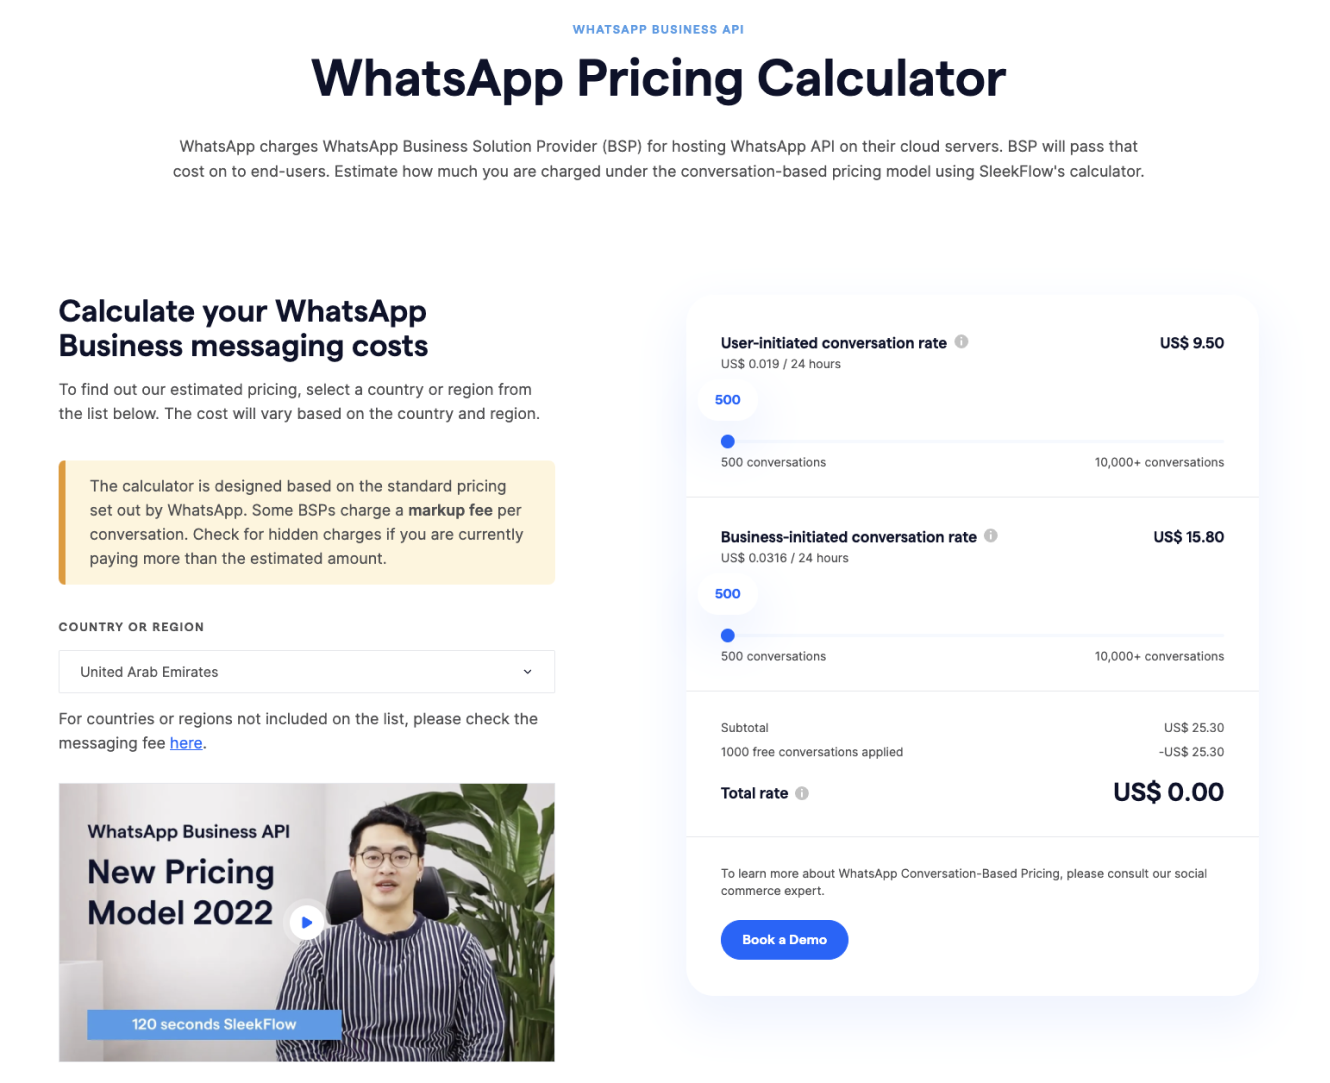 WhatsApp pricing calculator for the UAE